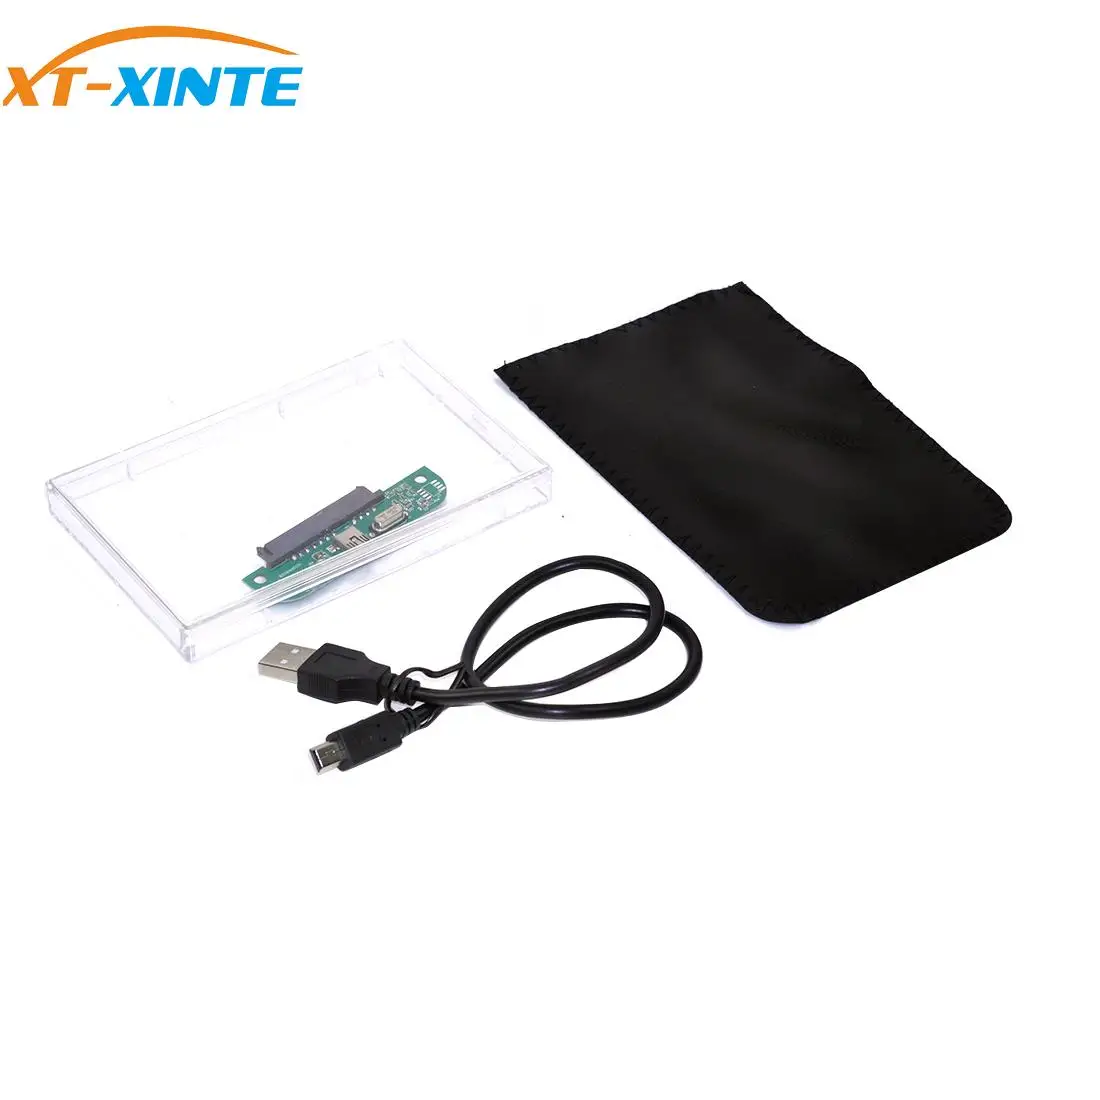 

XT-XINTE HDD Case 2.5 inch 5Gbps USB 3.0 2.0 to SATA Tool Free External Hard Drive Enclosure Box Support 3TB UASP Protocol